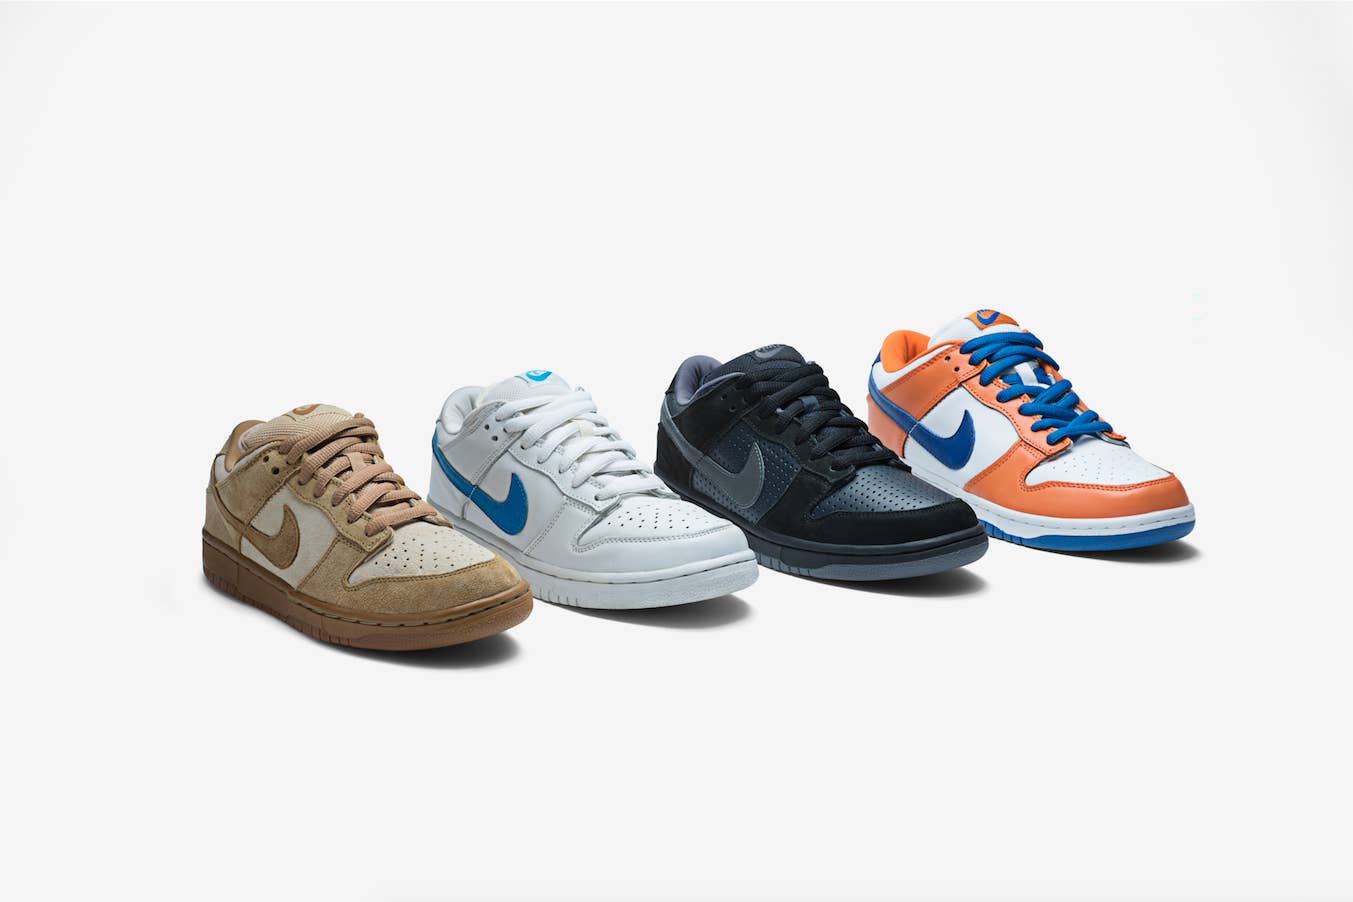 Jordan Brand Enters the Skateboarding Market with Upcoming Nike SB